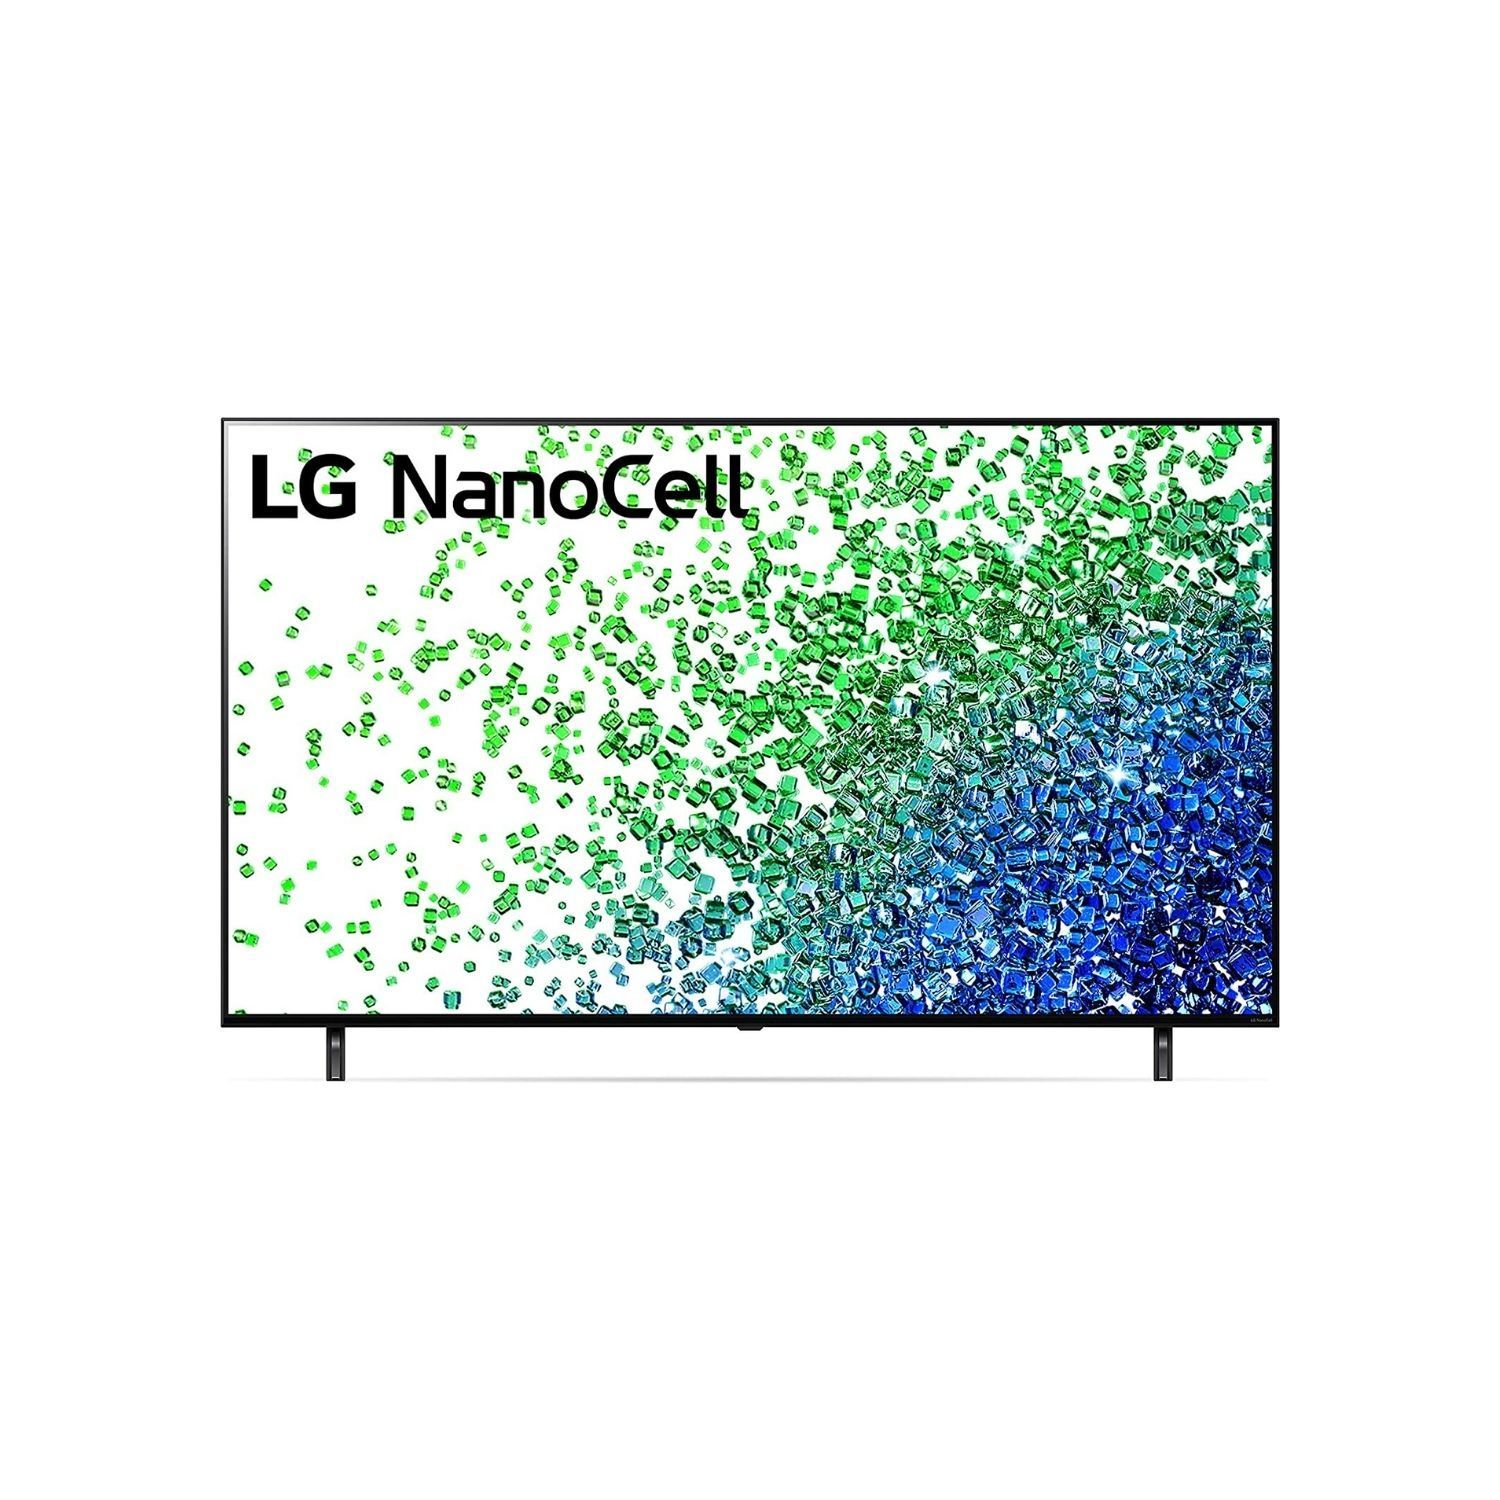 LG NanoCell 80 Series 55” 4k Smart TV 